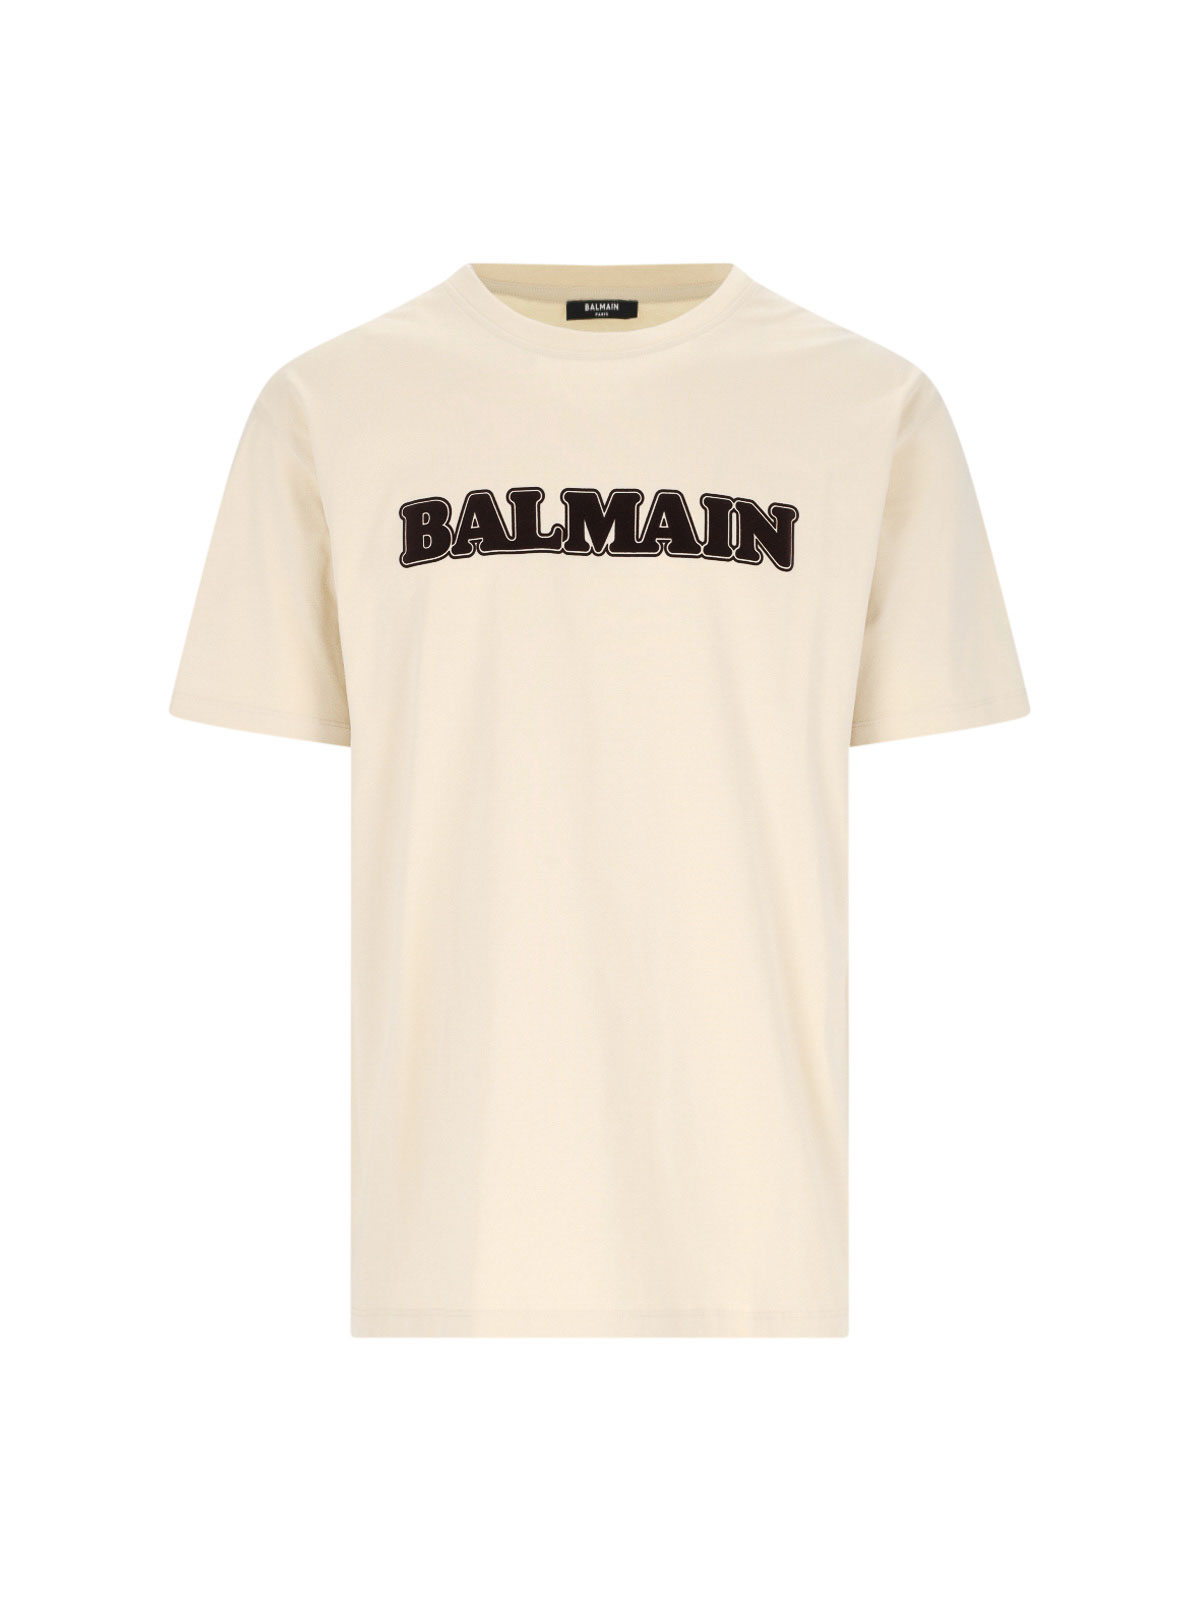 Tシャツ Balmain - Tシャツ - 白 - BH0EG000BC52GPA | THEBS